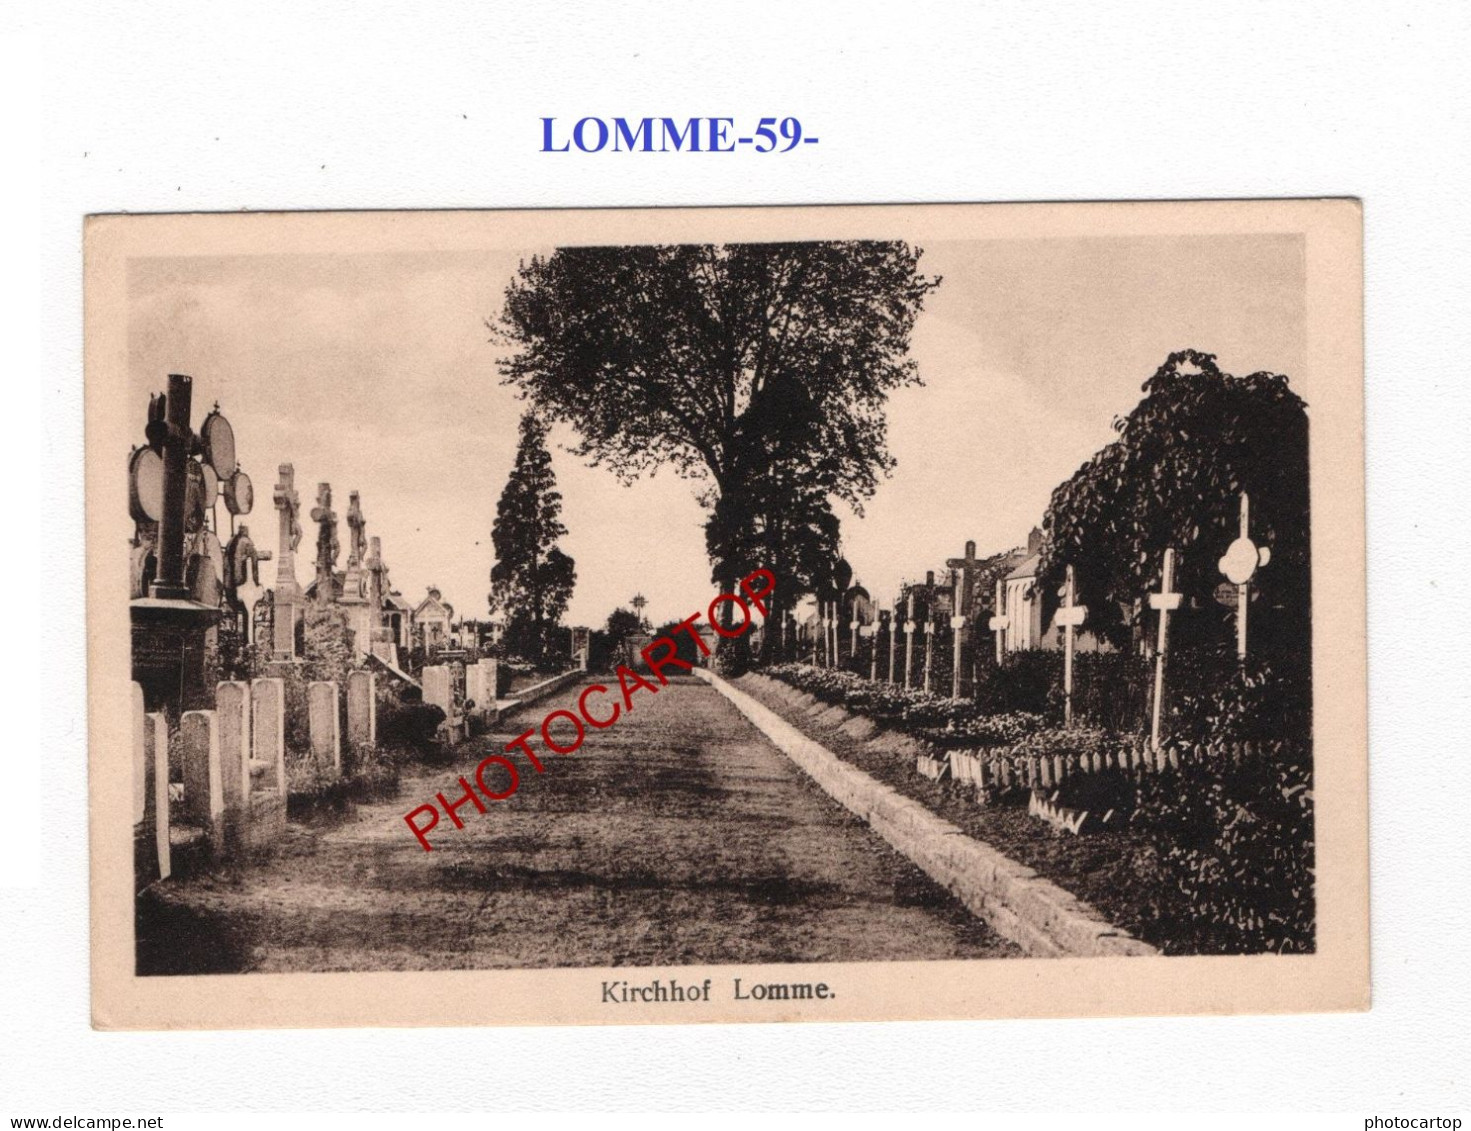 LOMME-59-Tombes-Cimetiere-CARTE Imprimee Allemande-GUERRE 14-18-1 WK-MILITARIA- - Cimetières Militaires